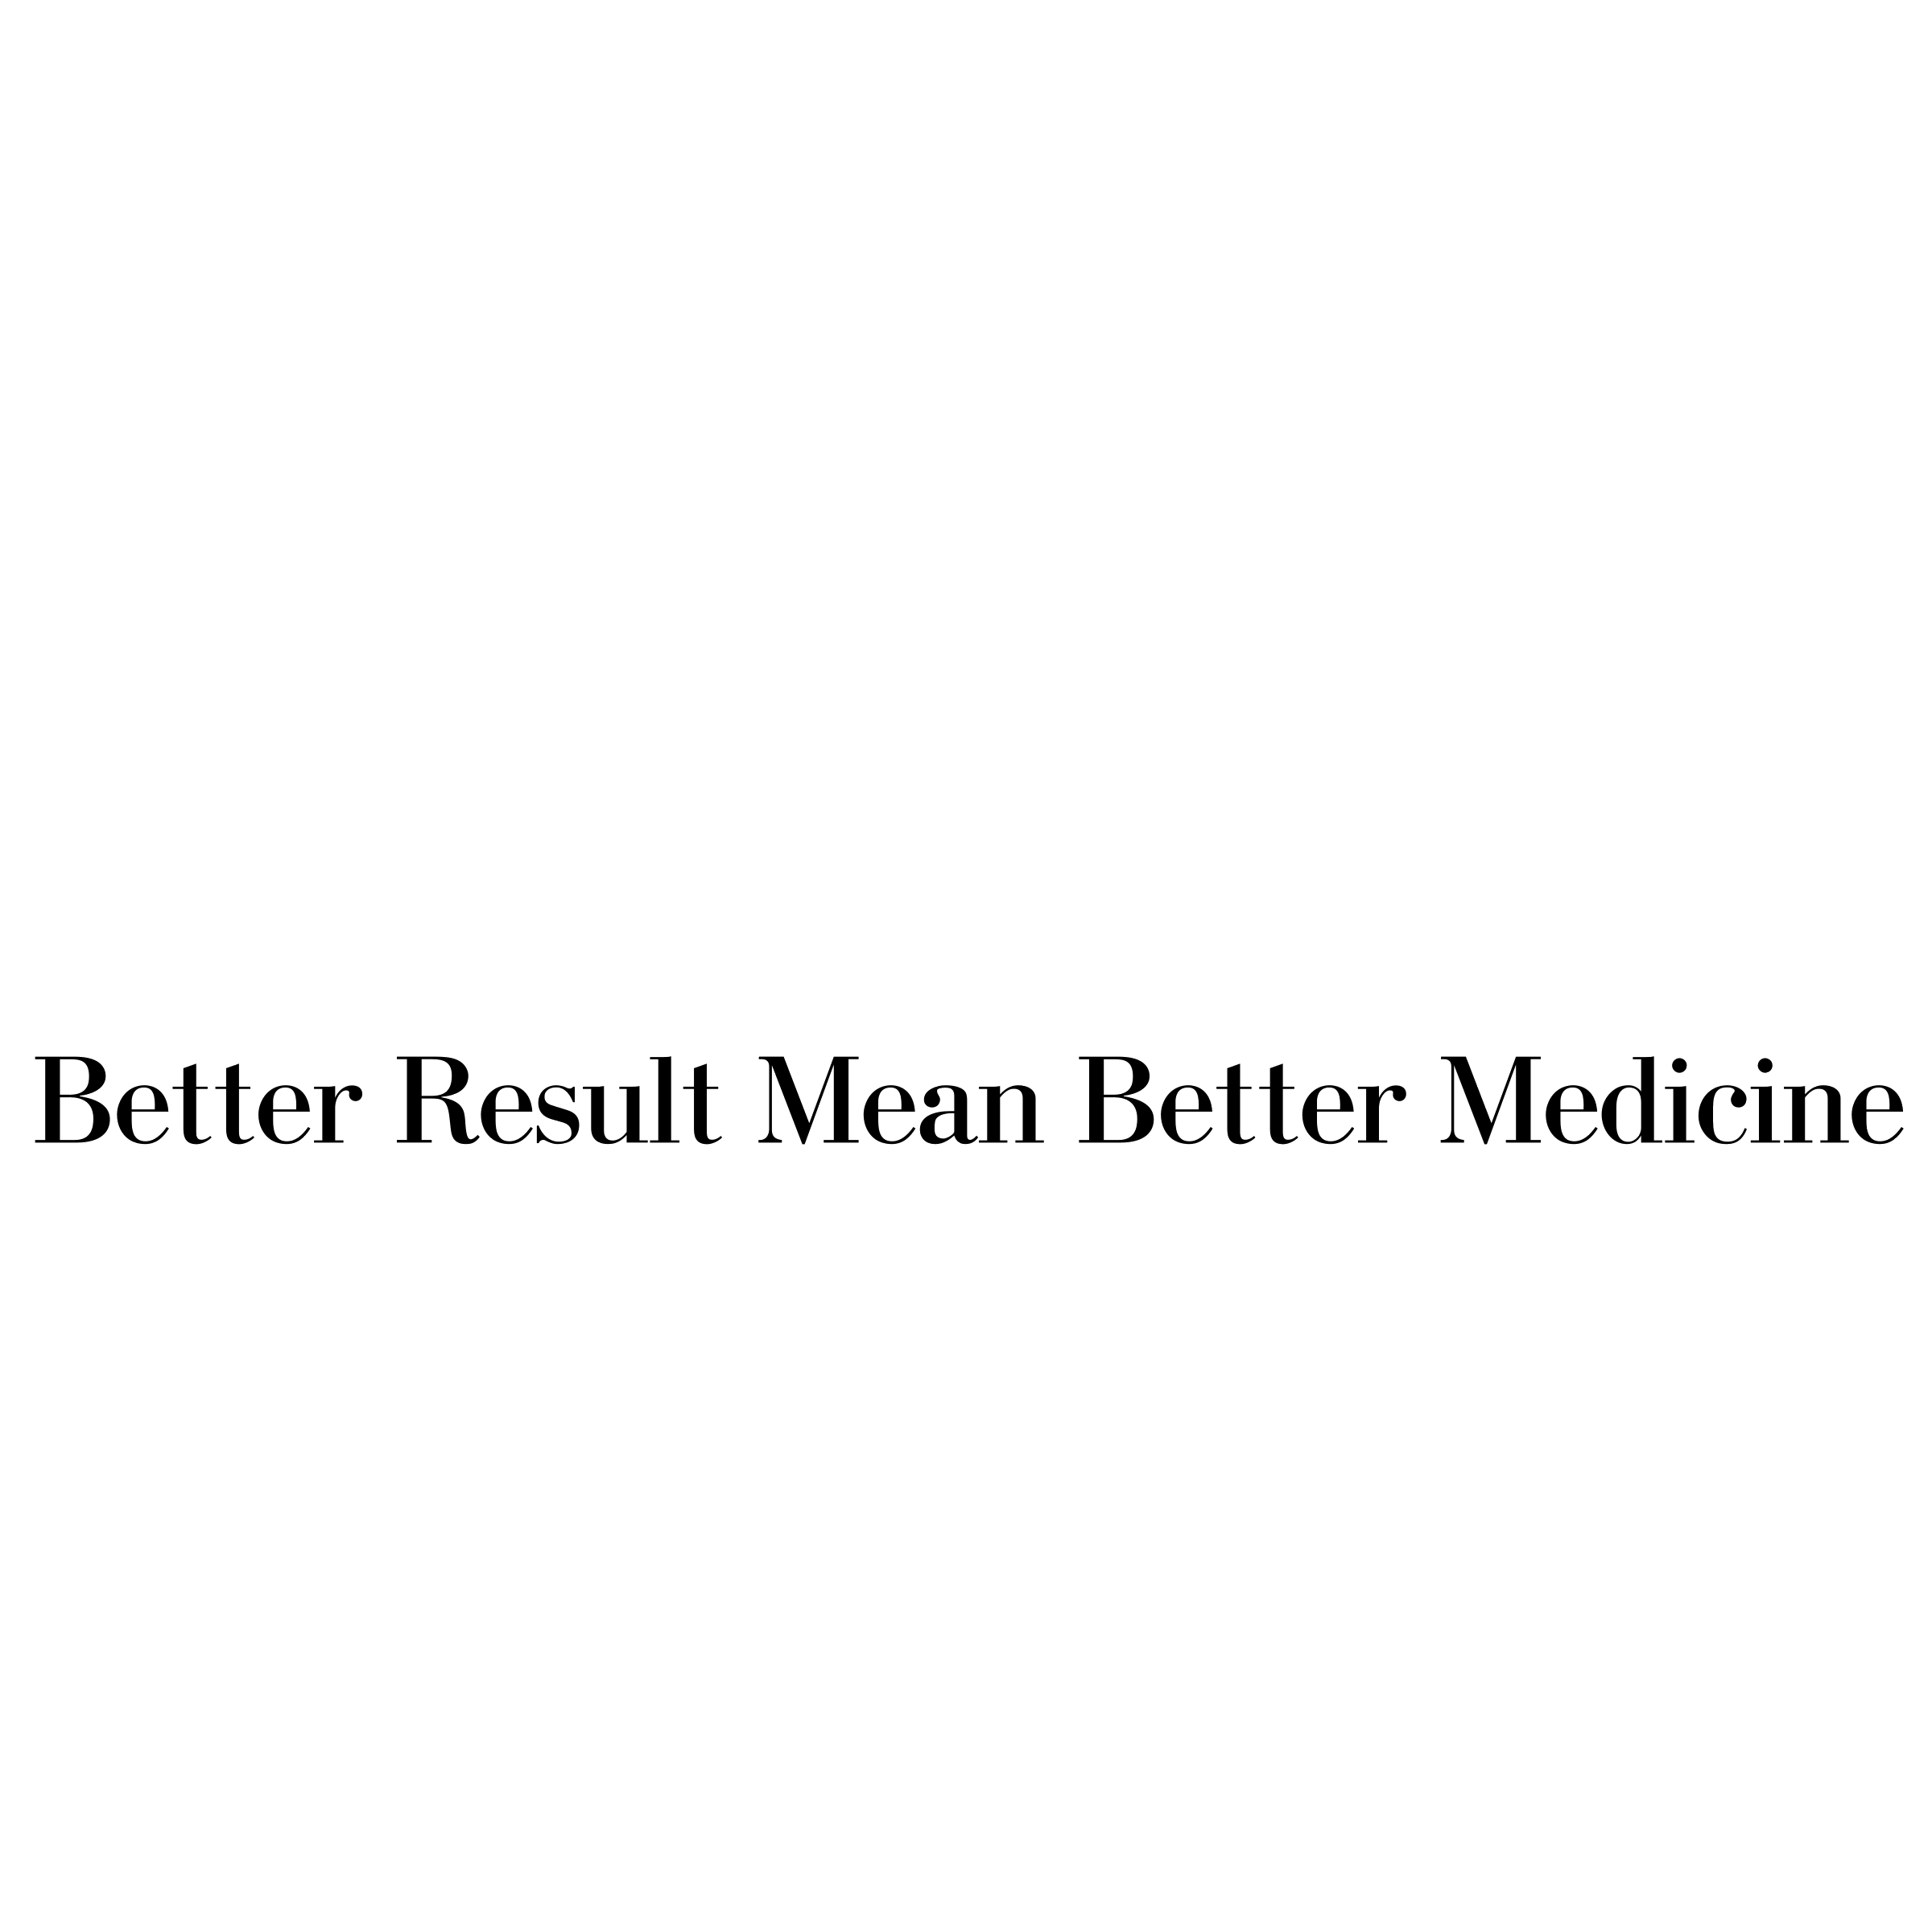 Biostar Logo - Biostar Logo PNG Transparent & SVG Vector